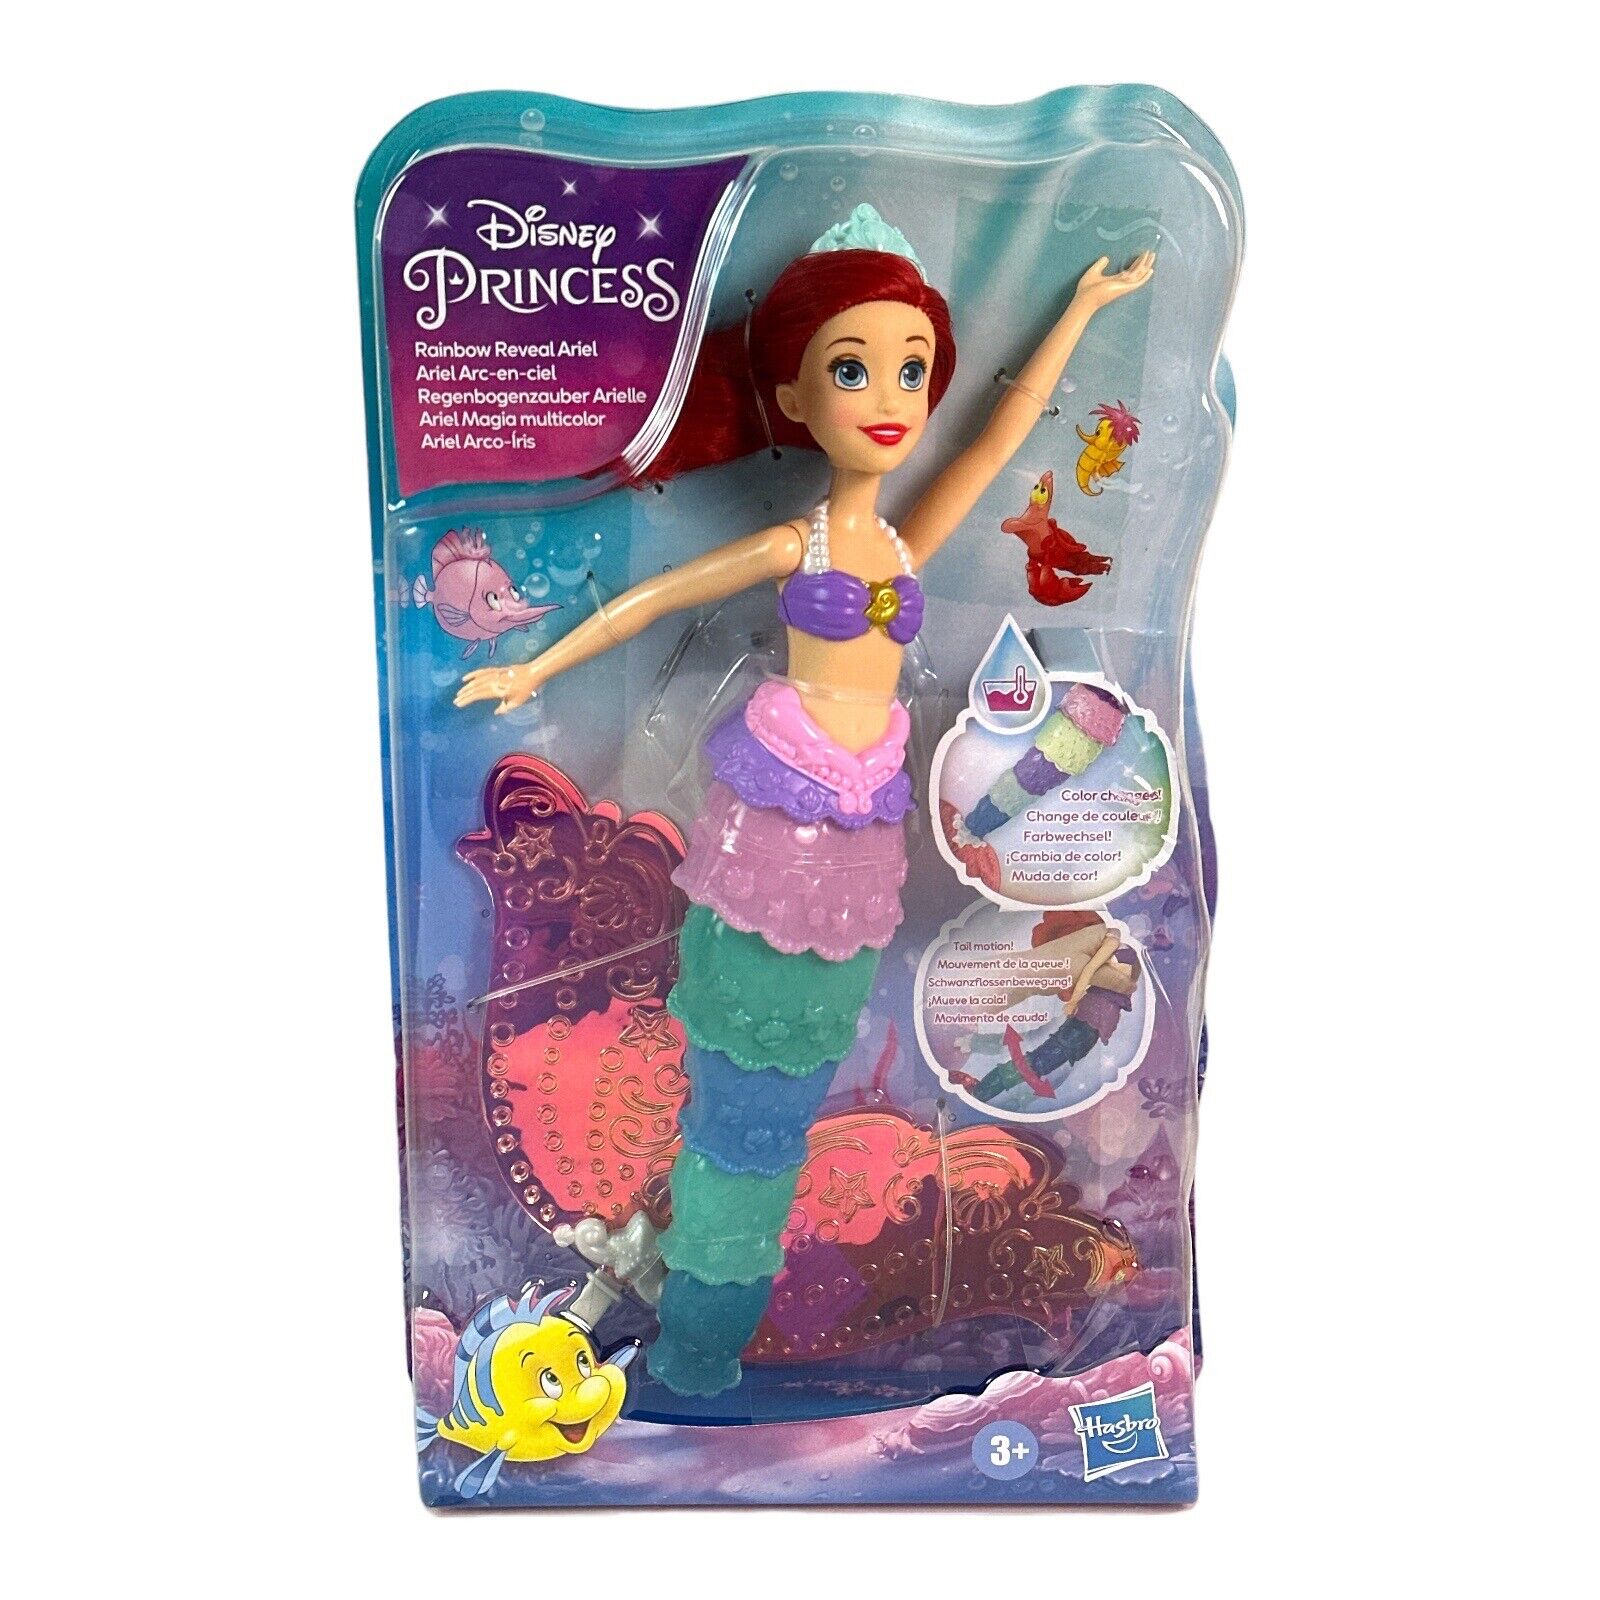 Disney Princess Rainbow Reveal Ariel Color Change Doll (The Little Mermaid) NEW